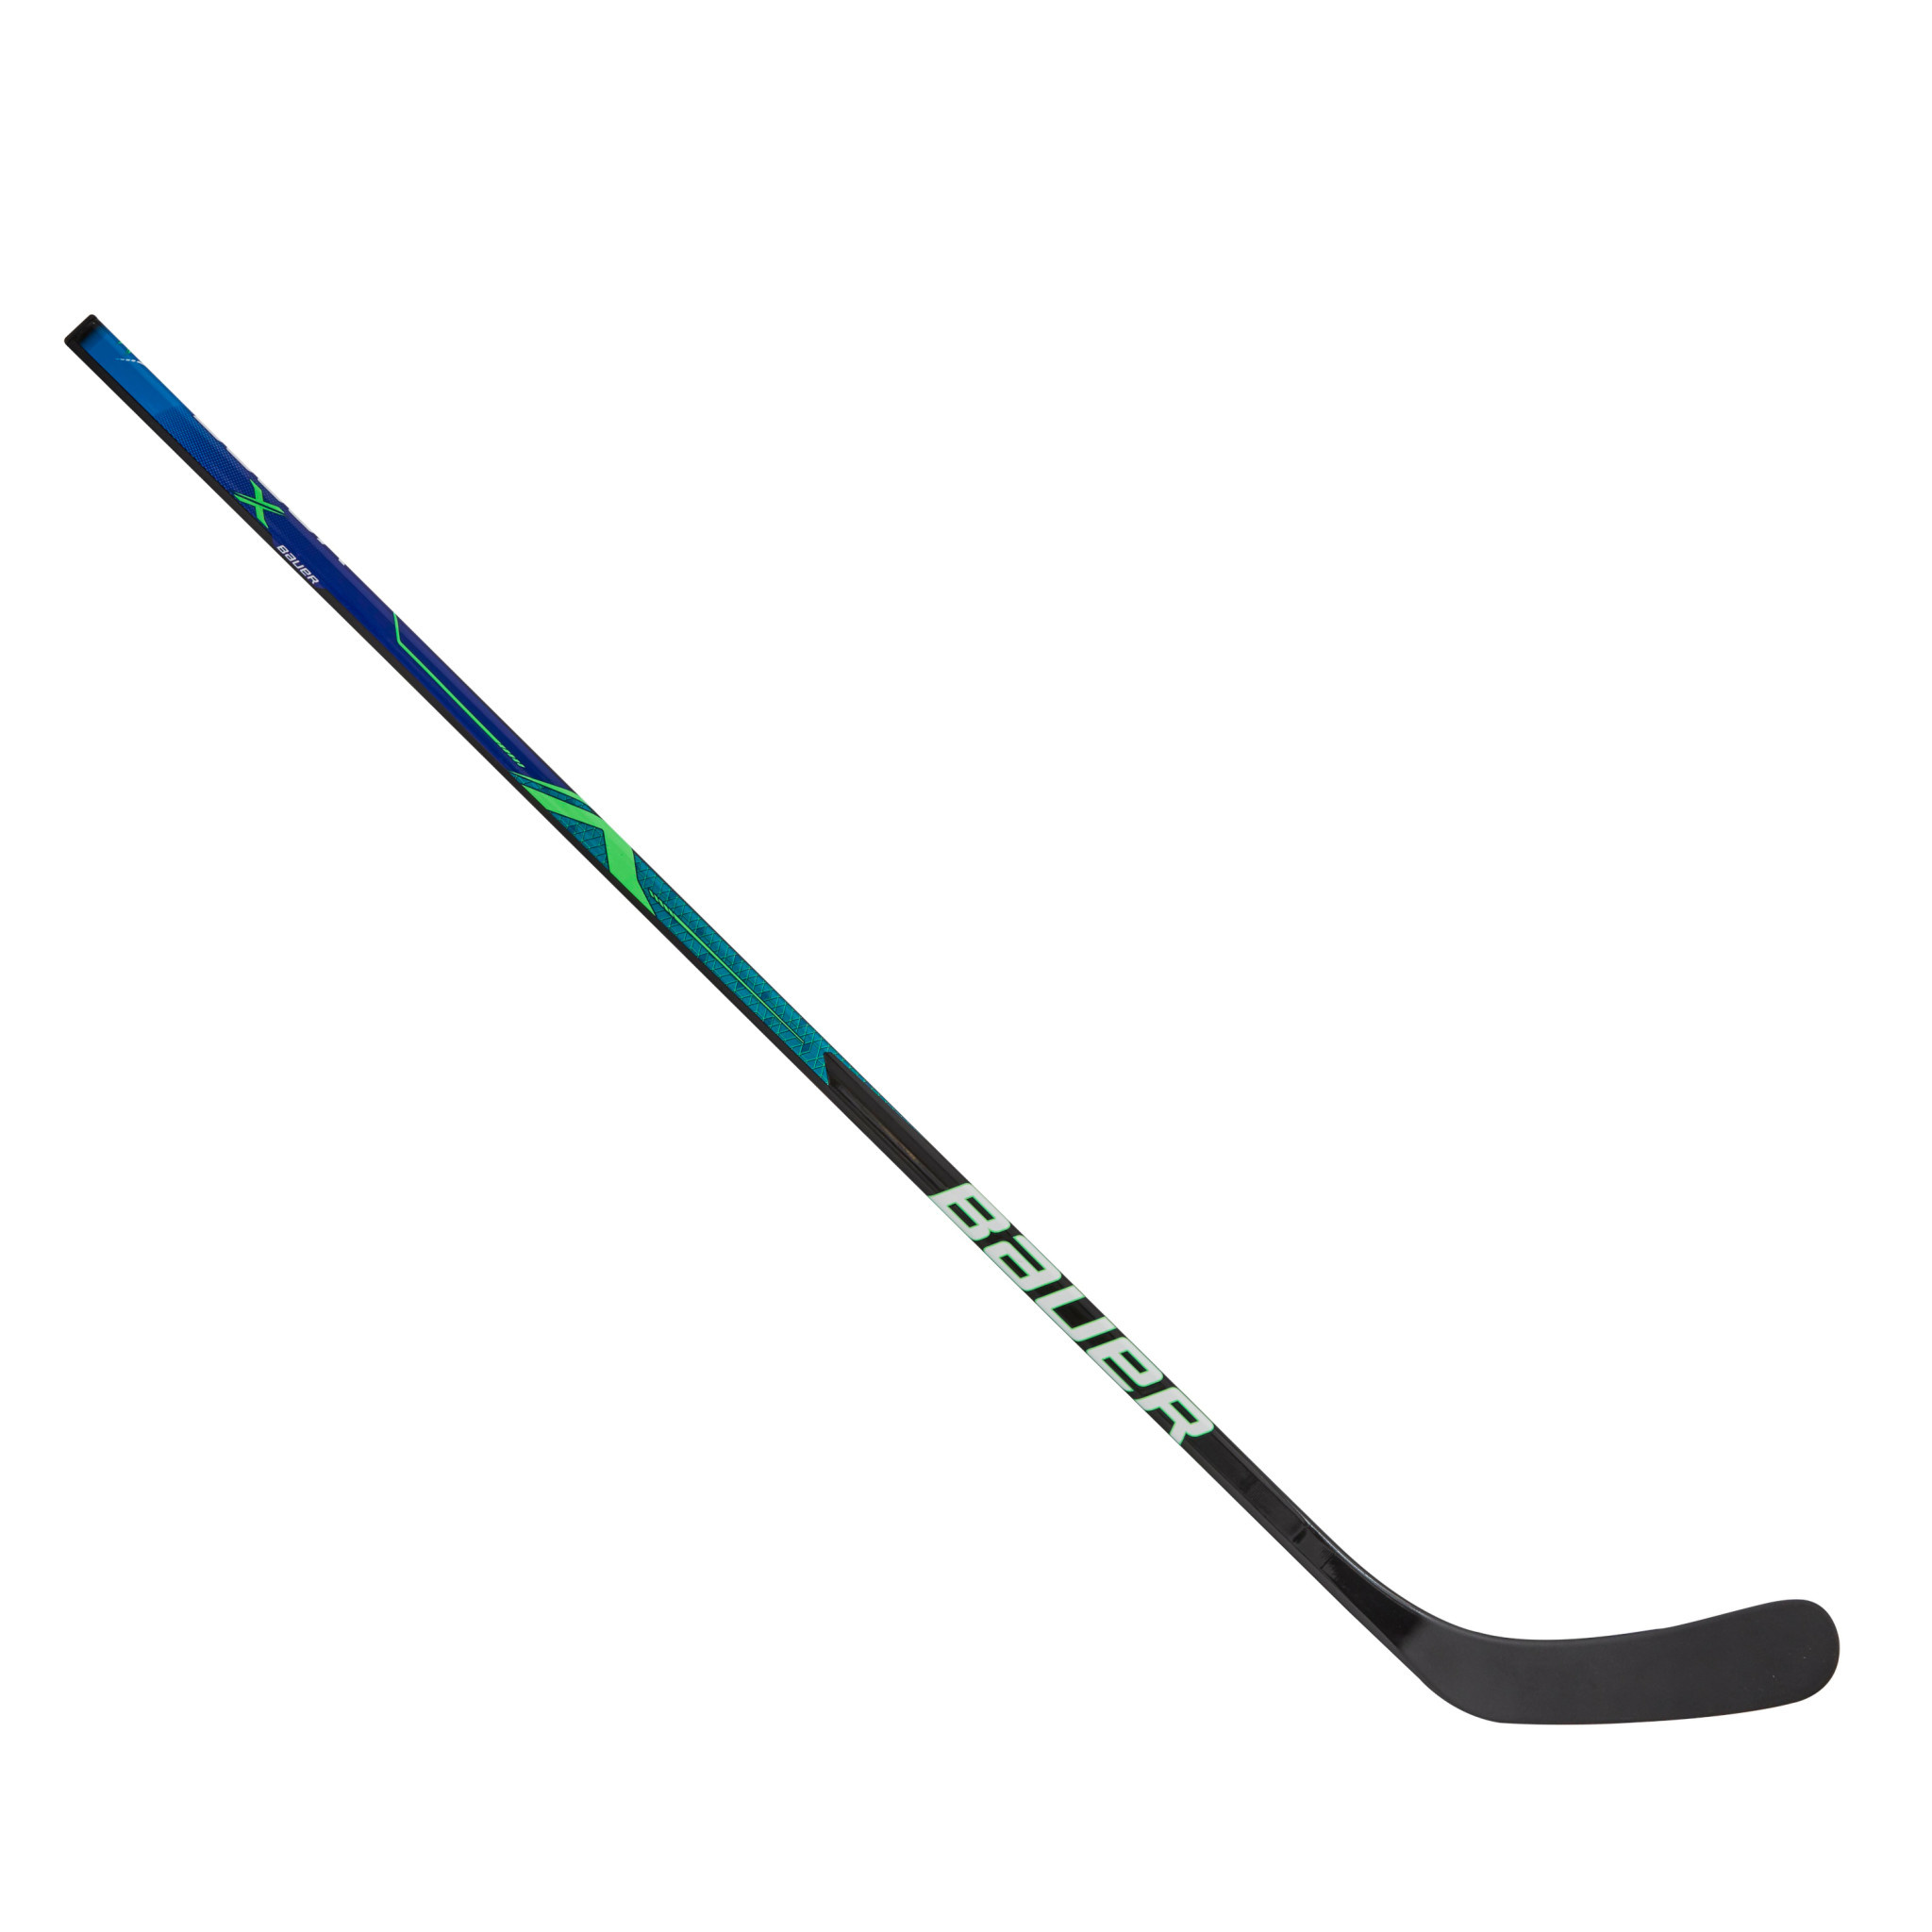 2x bande de protection en tissu pour bâton de hockey sur glace 